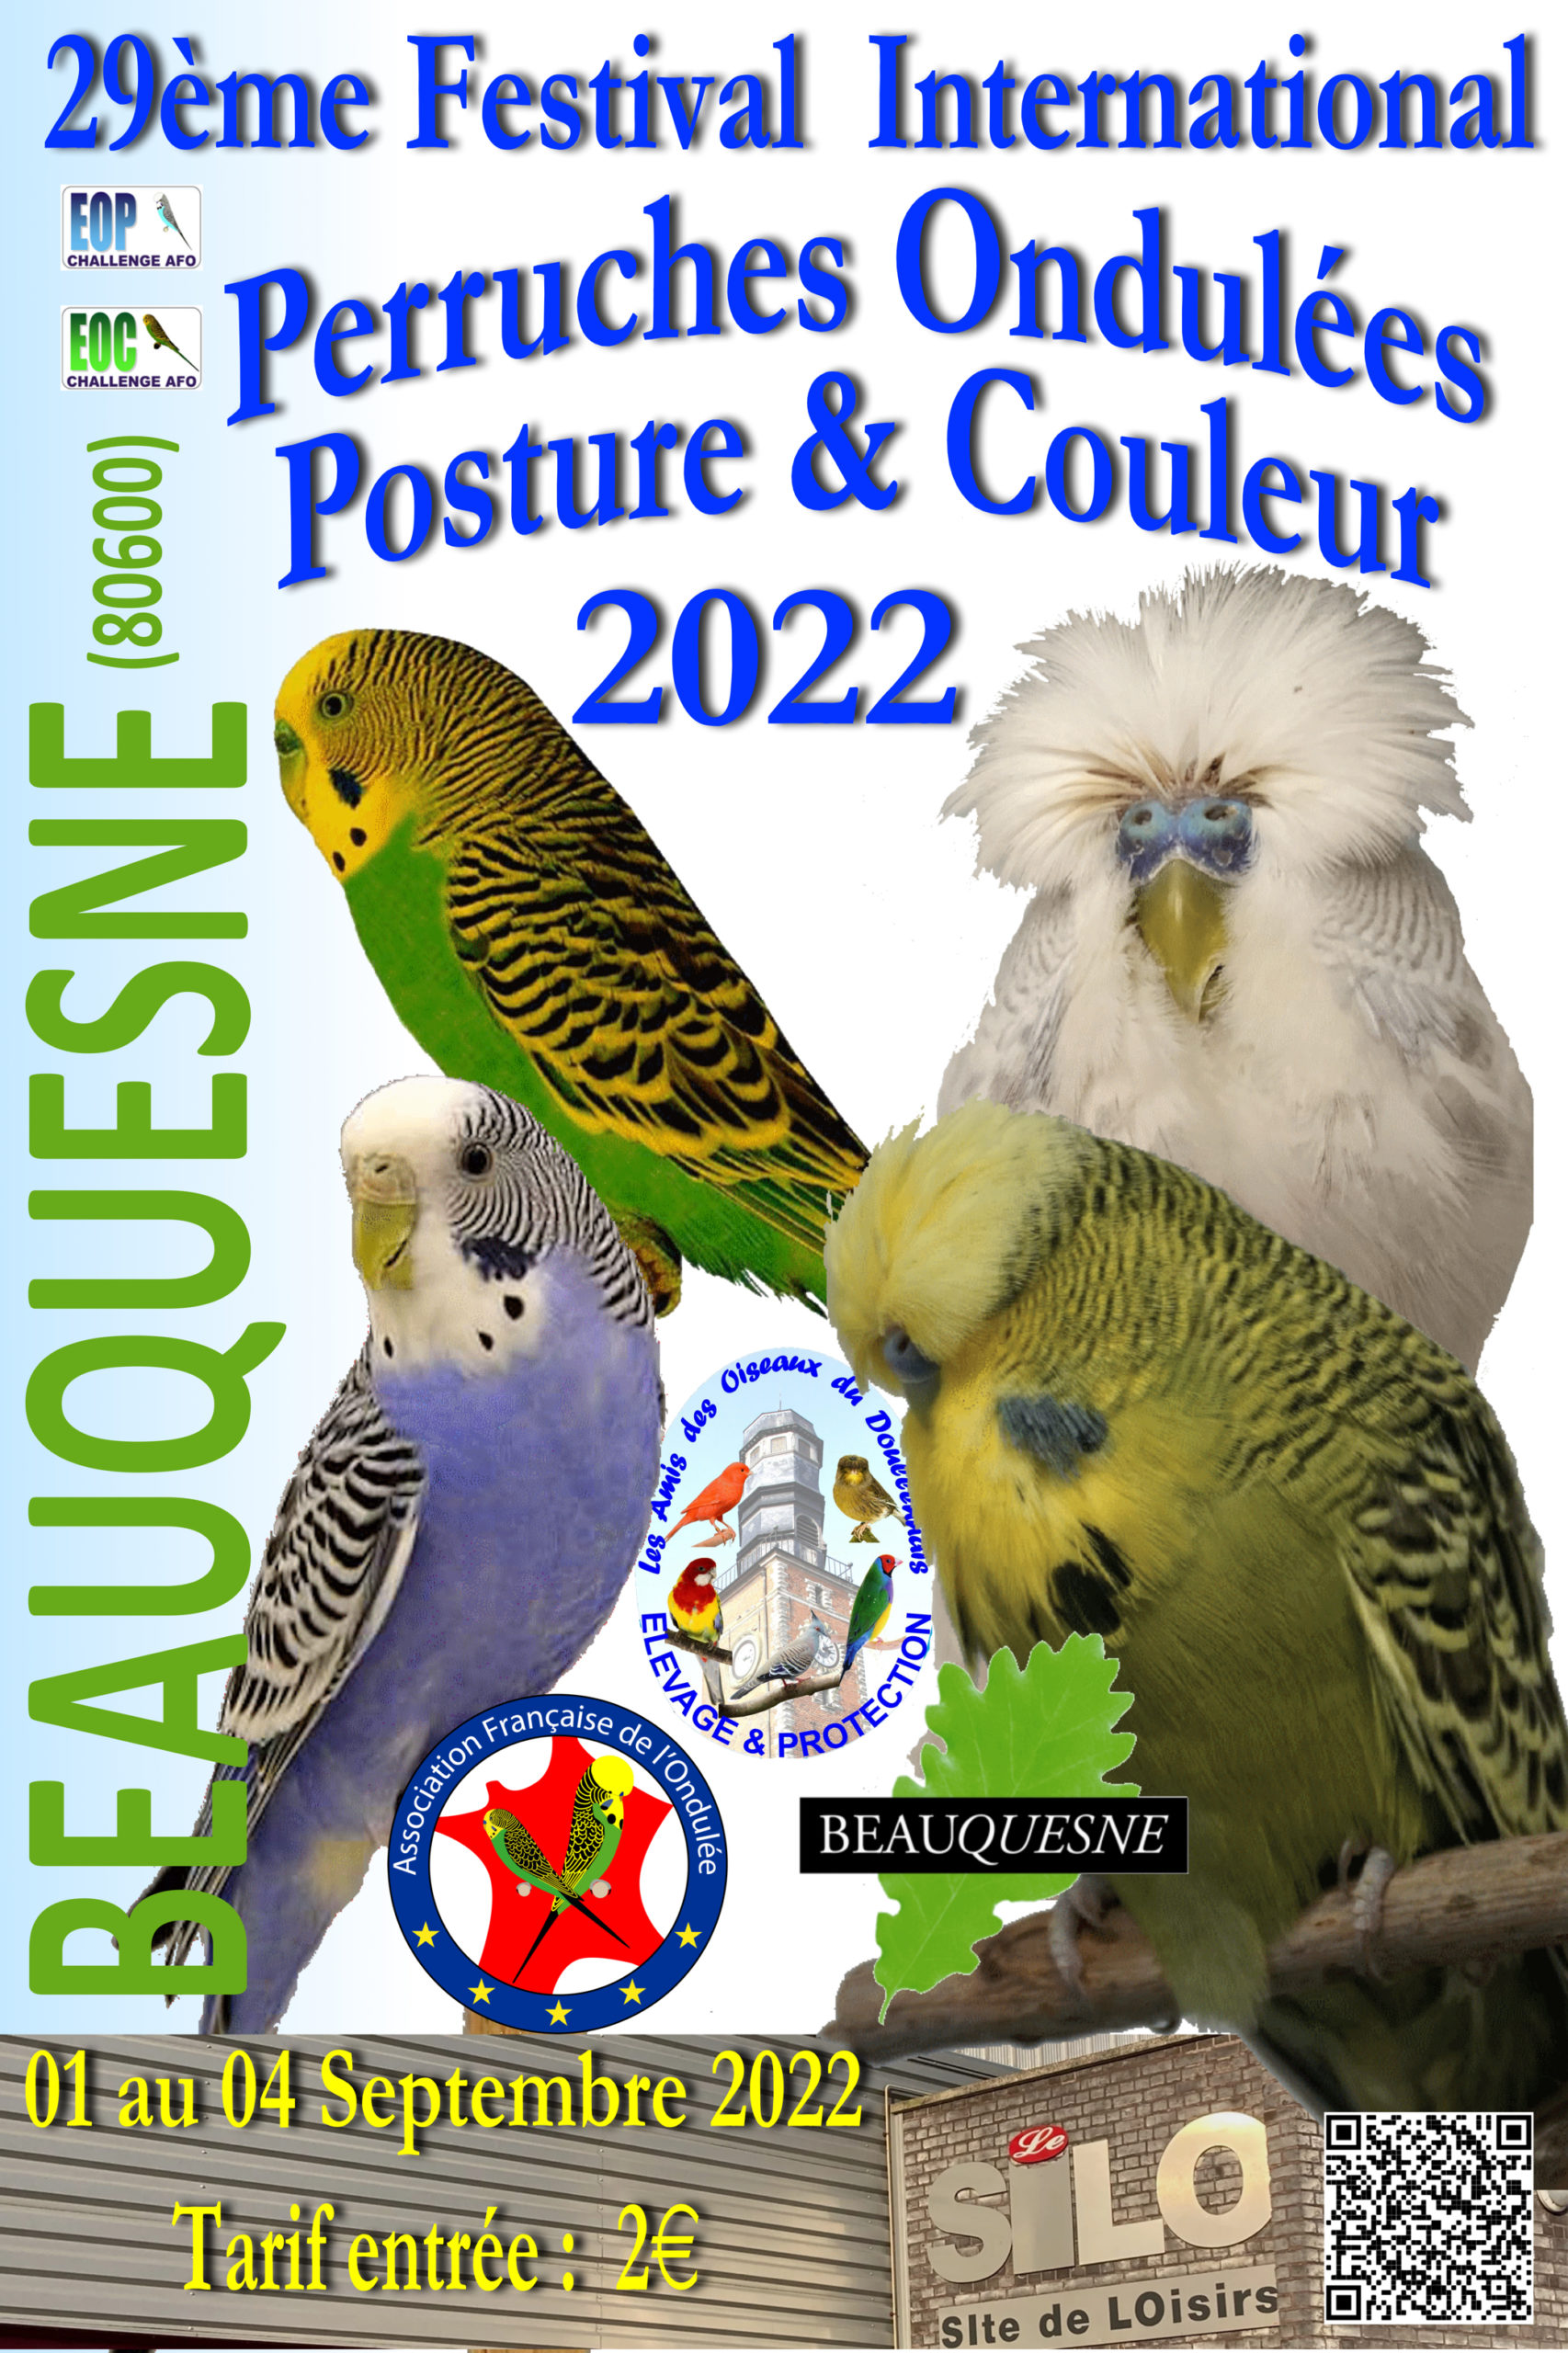 Festival Beauquesne 2022